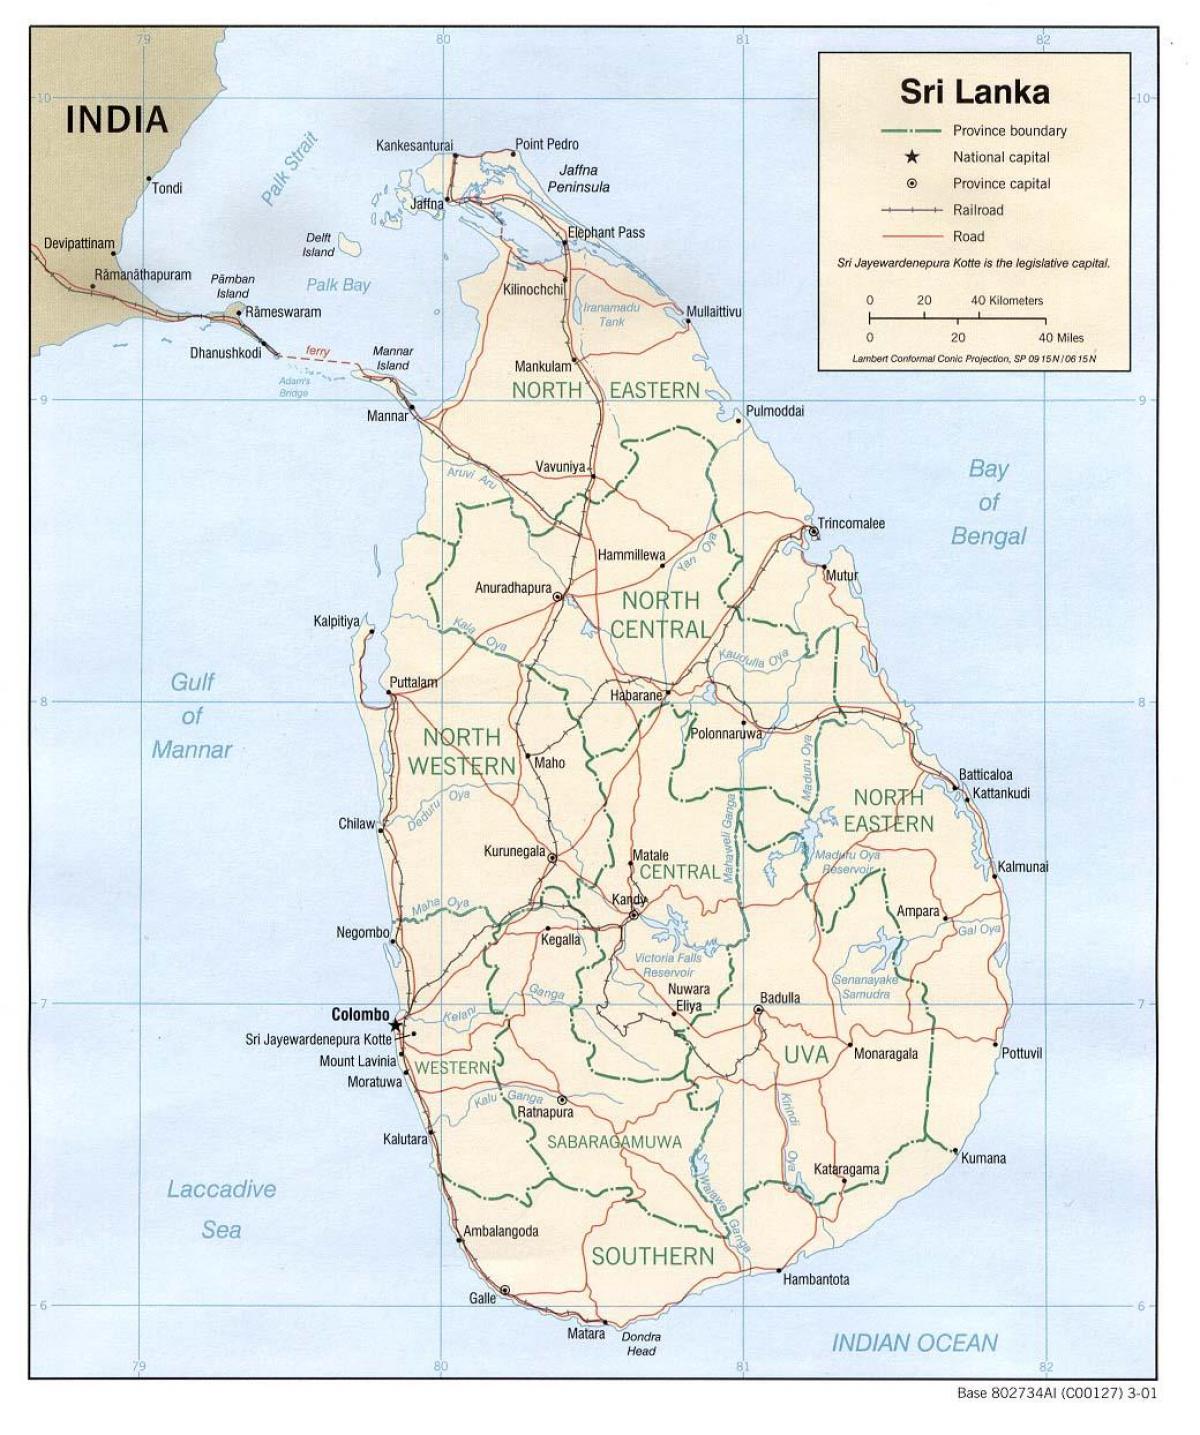 Sri Lanka bus mappa